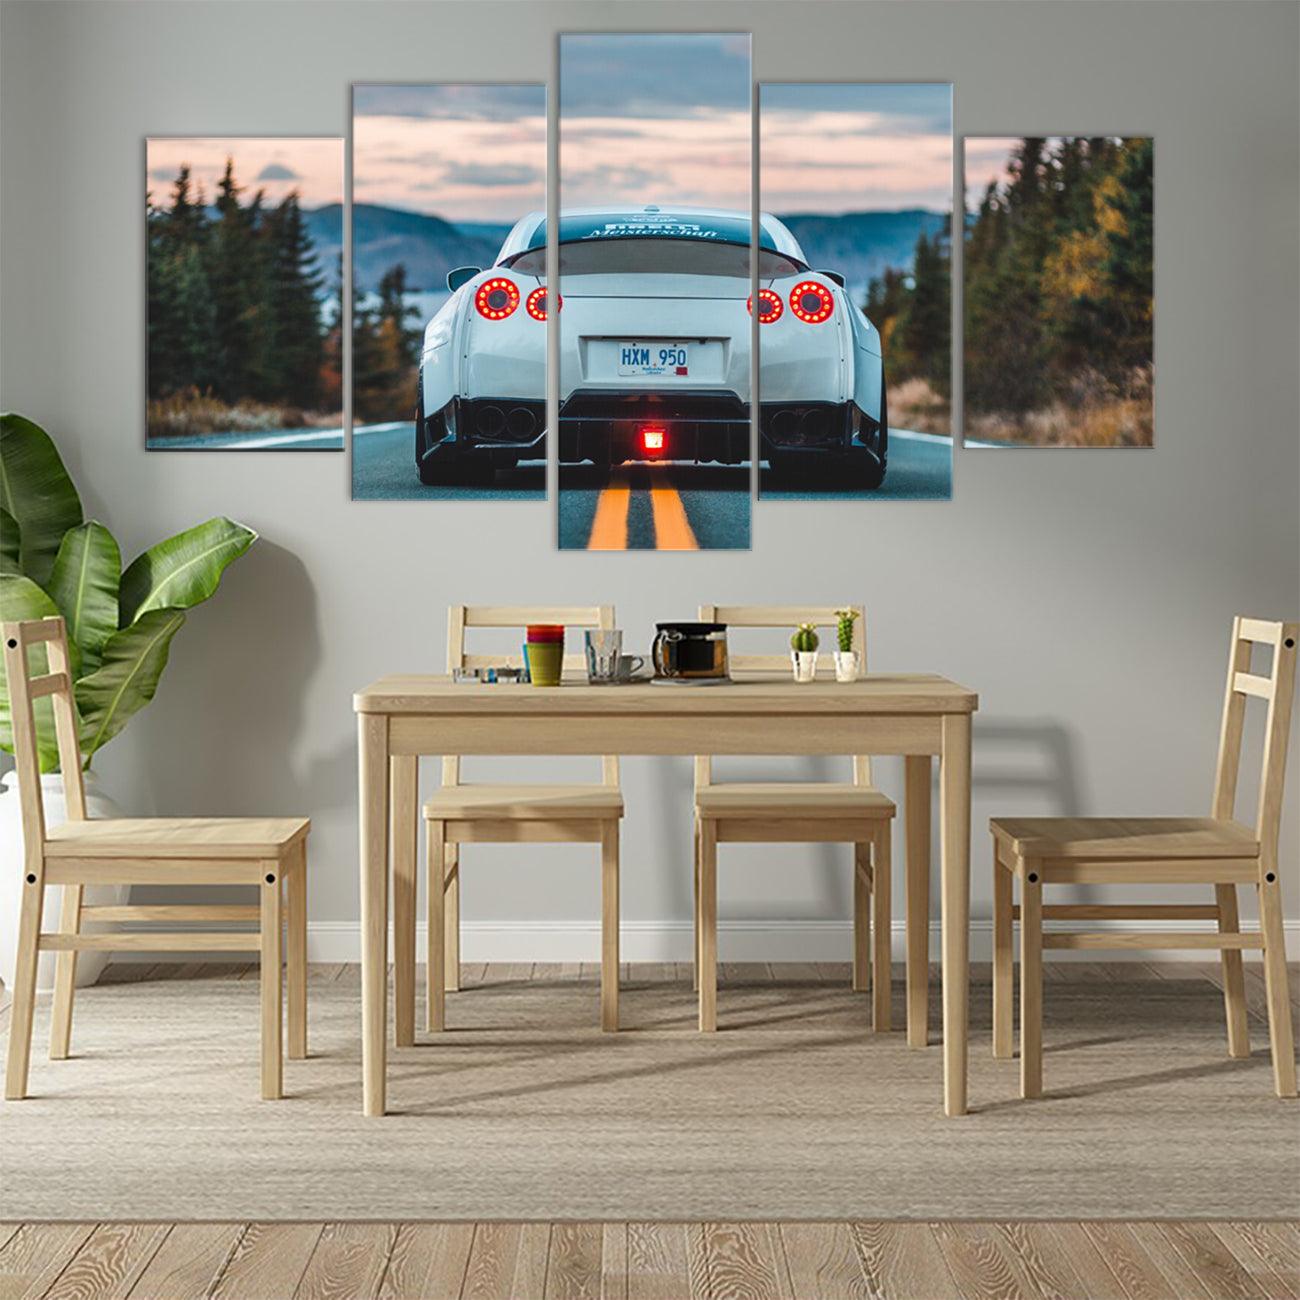 Nissan GTR 5 Panel Canvas Print Wall Art - GotItHere.com